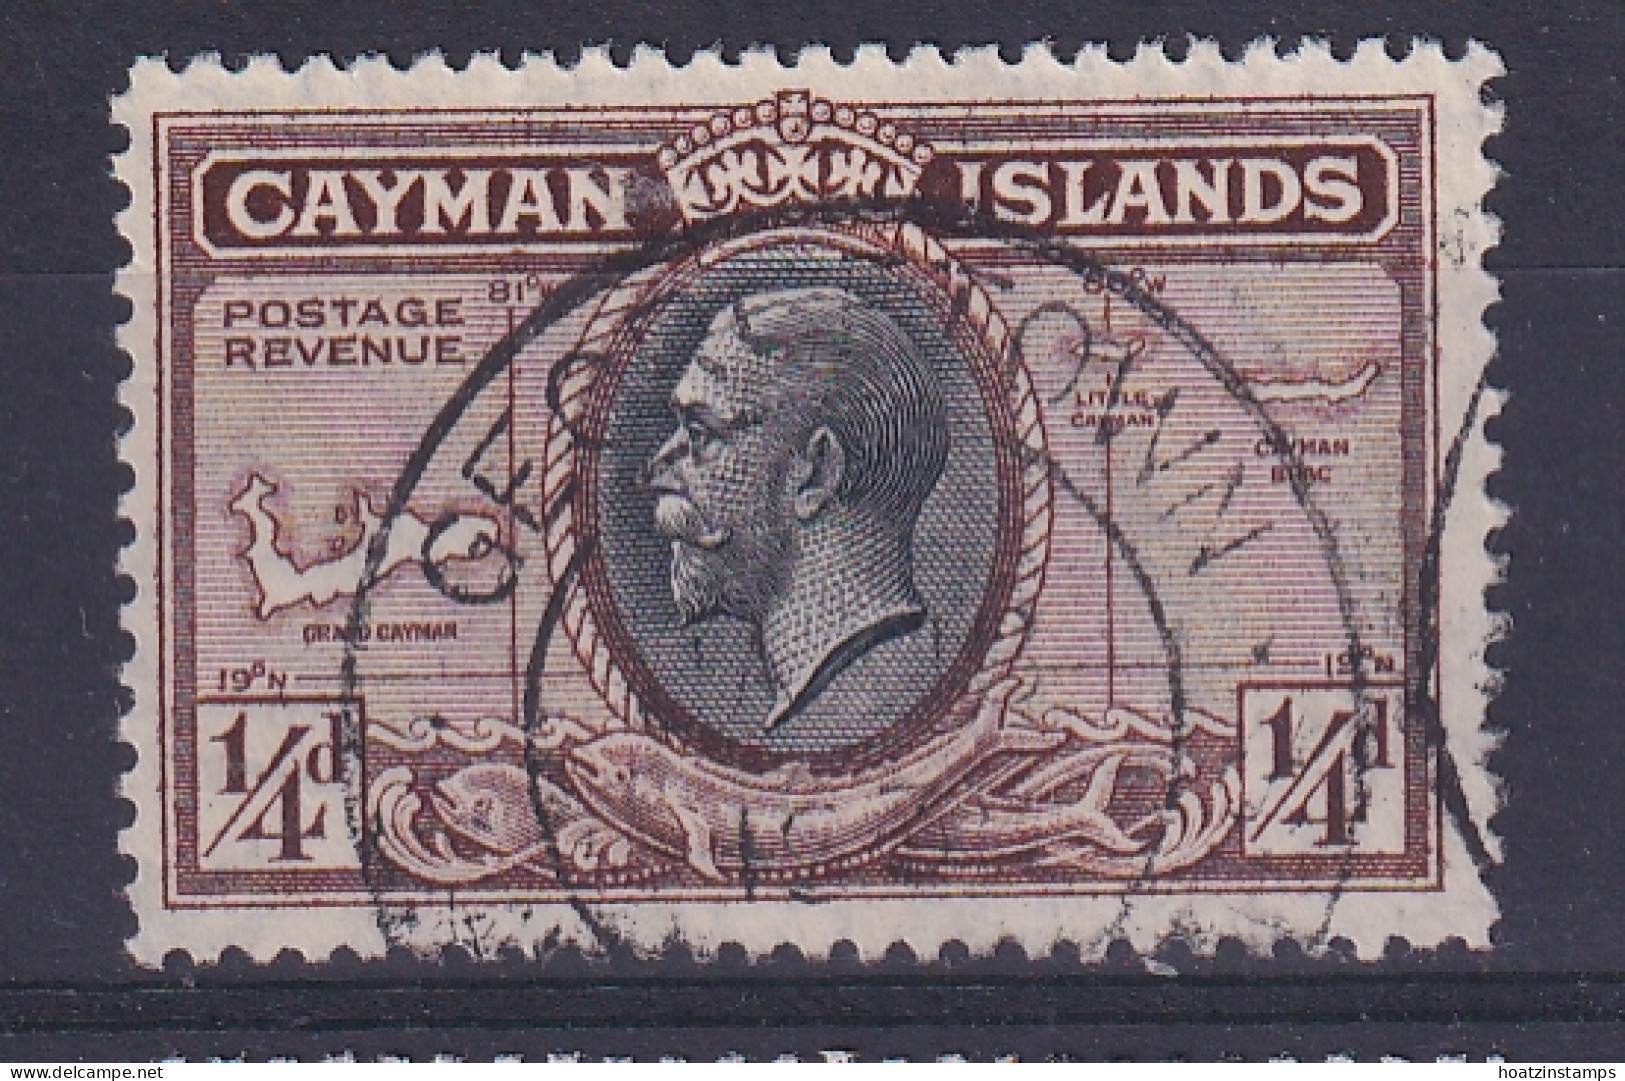 Cayman Islands: 1935   KGV - Pictorial   SG96   ¼d     Used - Iles Caïmans